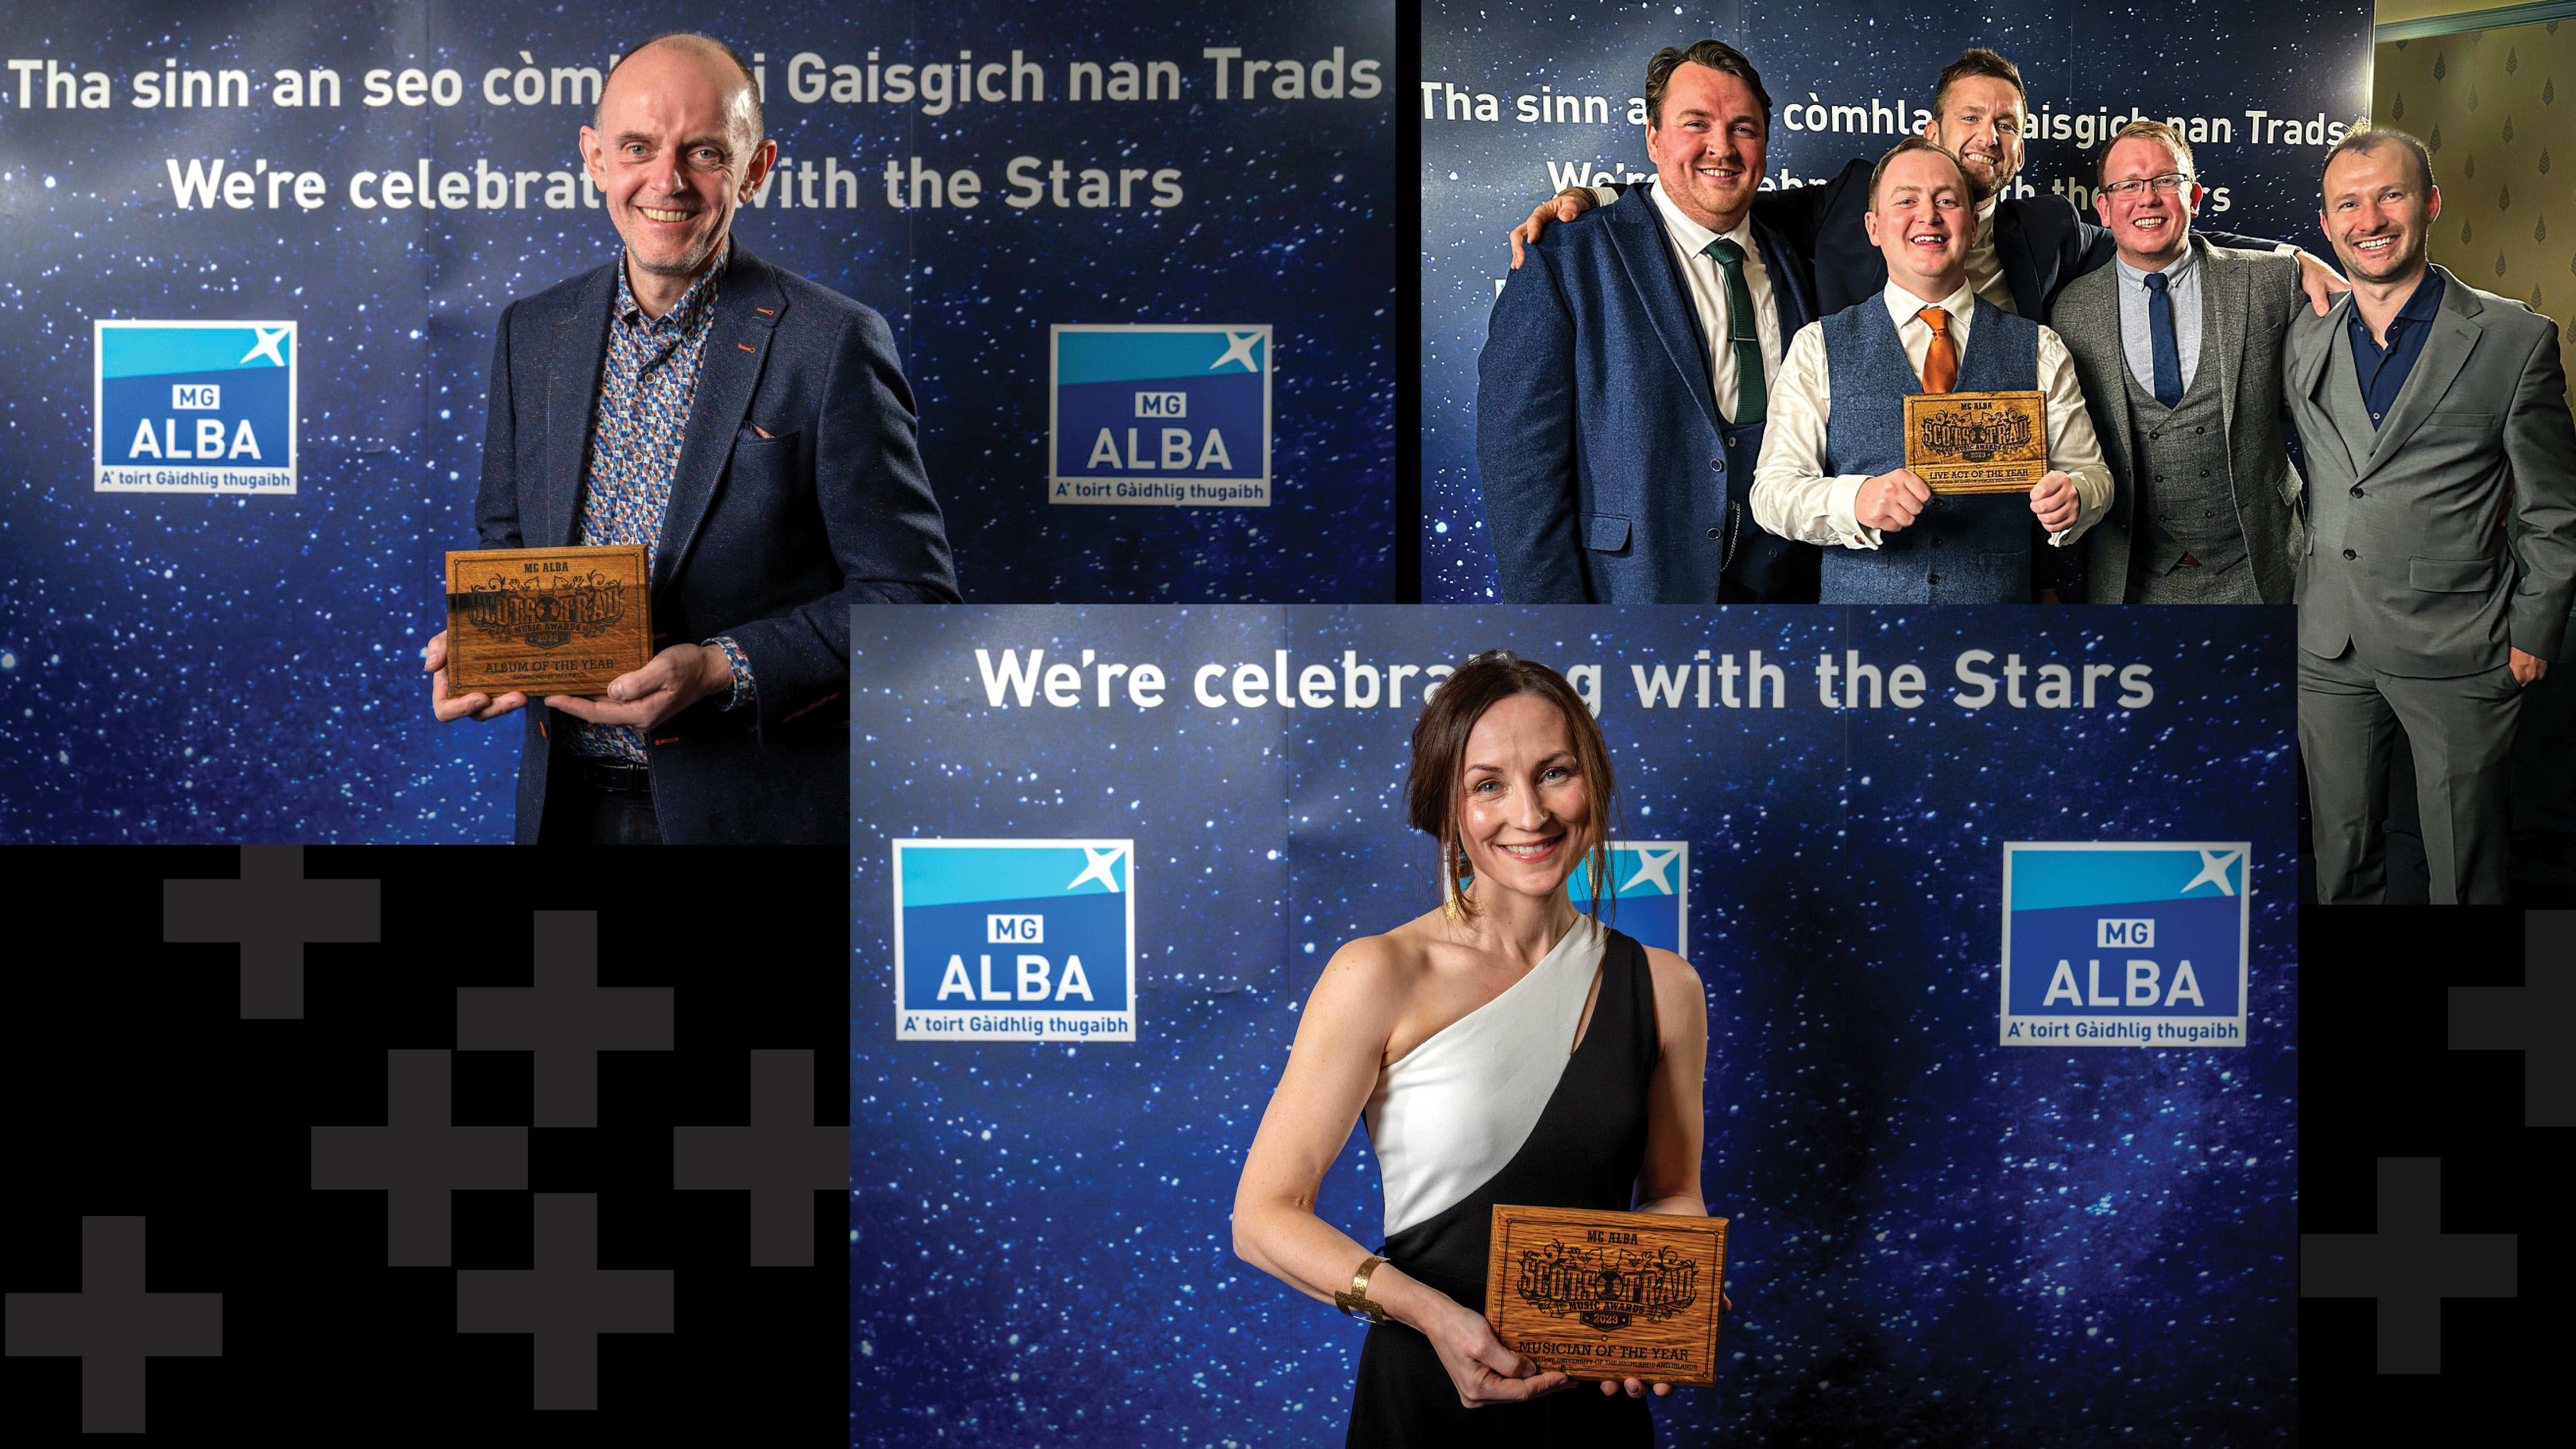 UHI alumni success at MG ALBA Scots Trad Music Awards